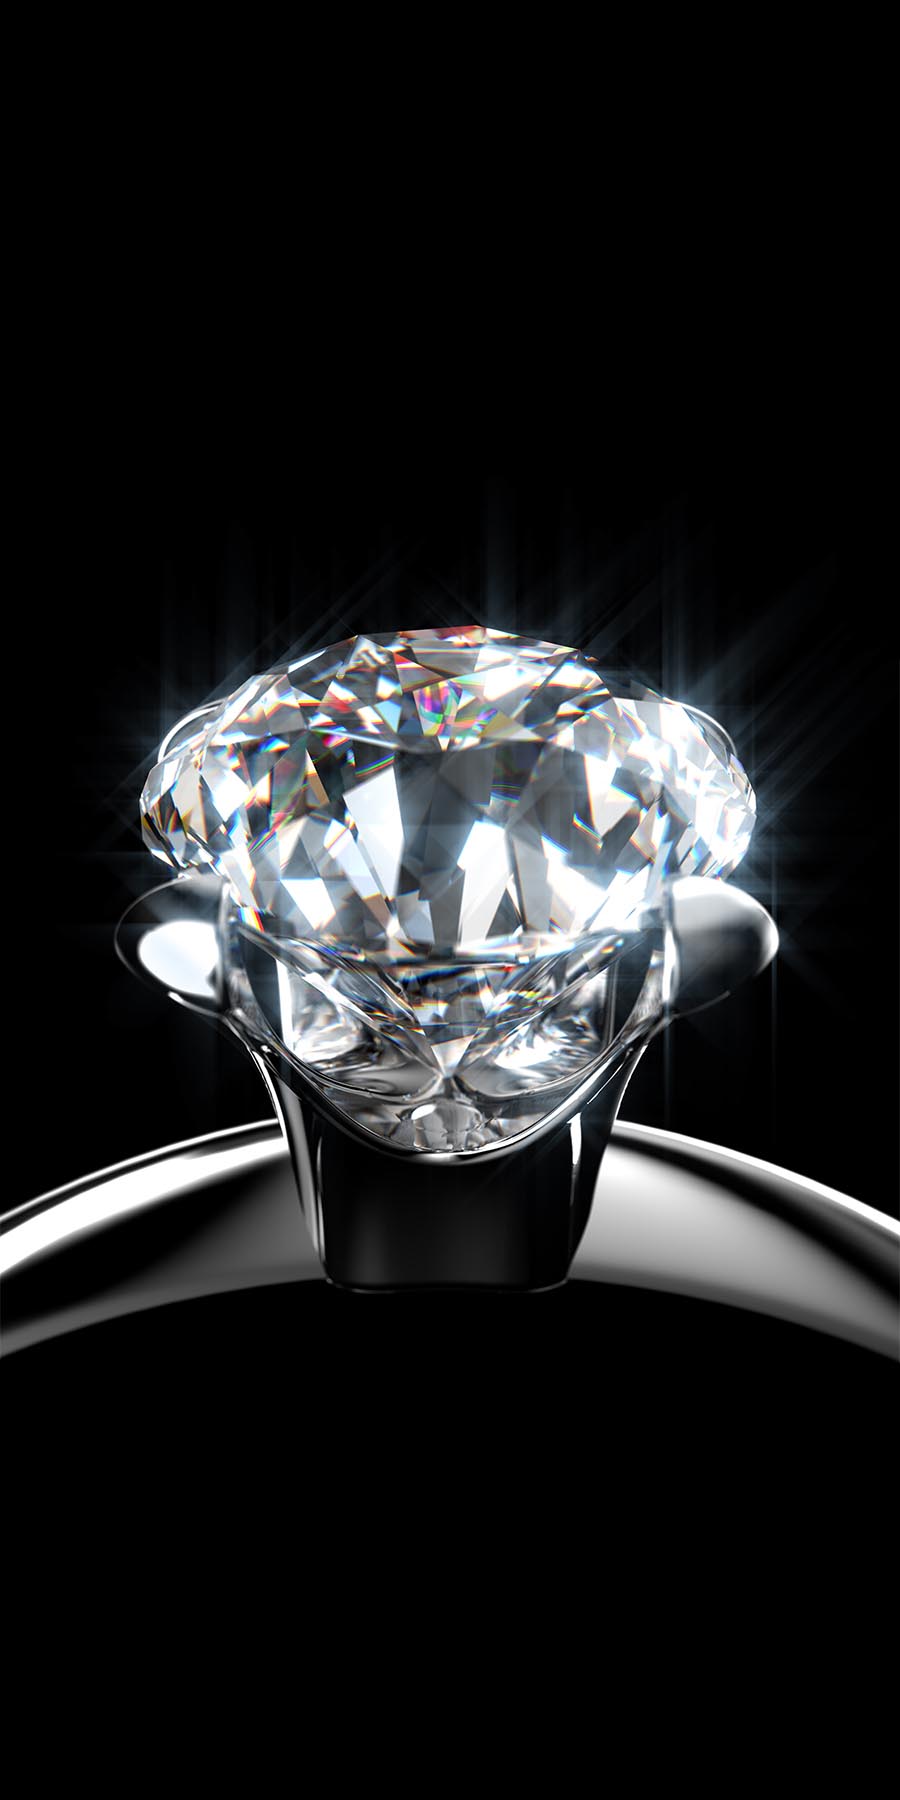 Company diamond ring splash screen and login page Vector Image